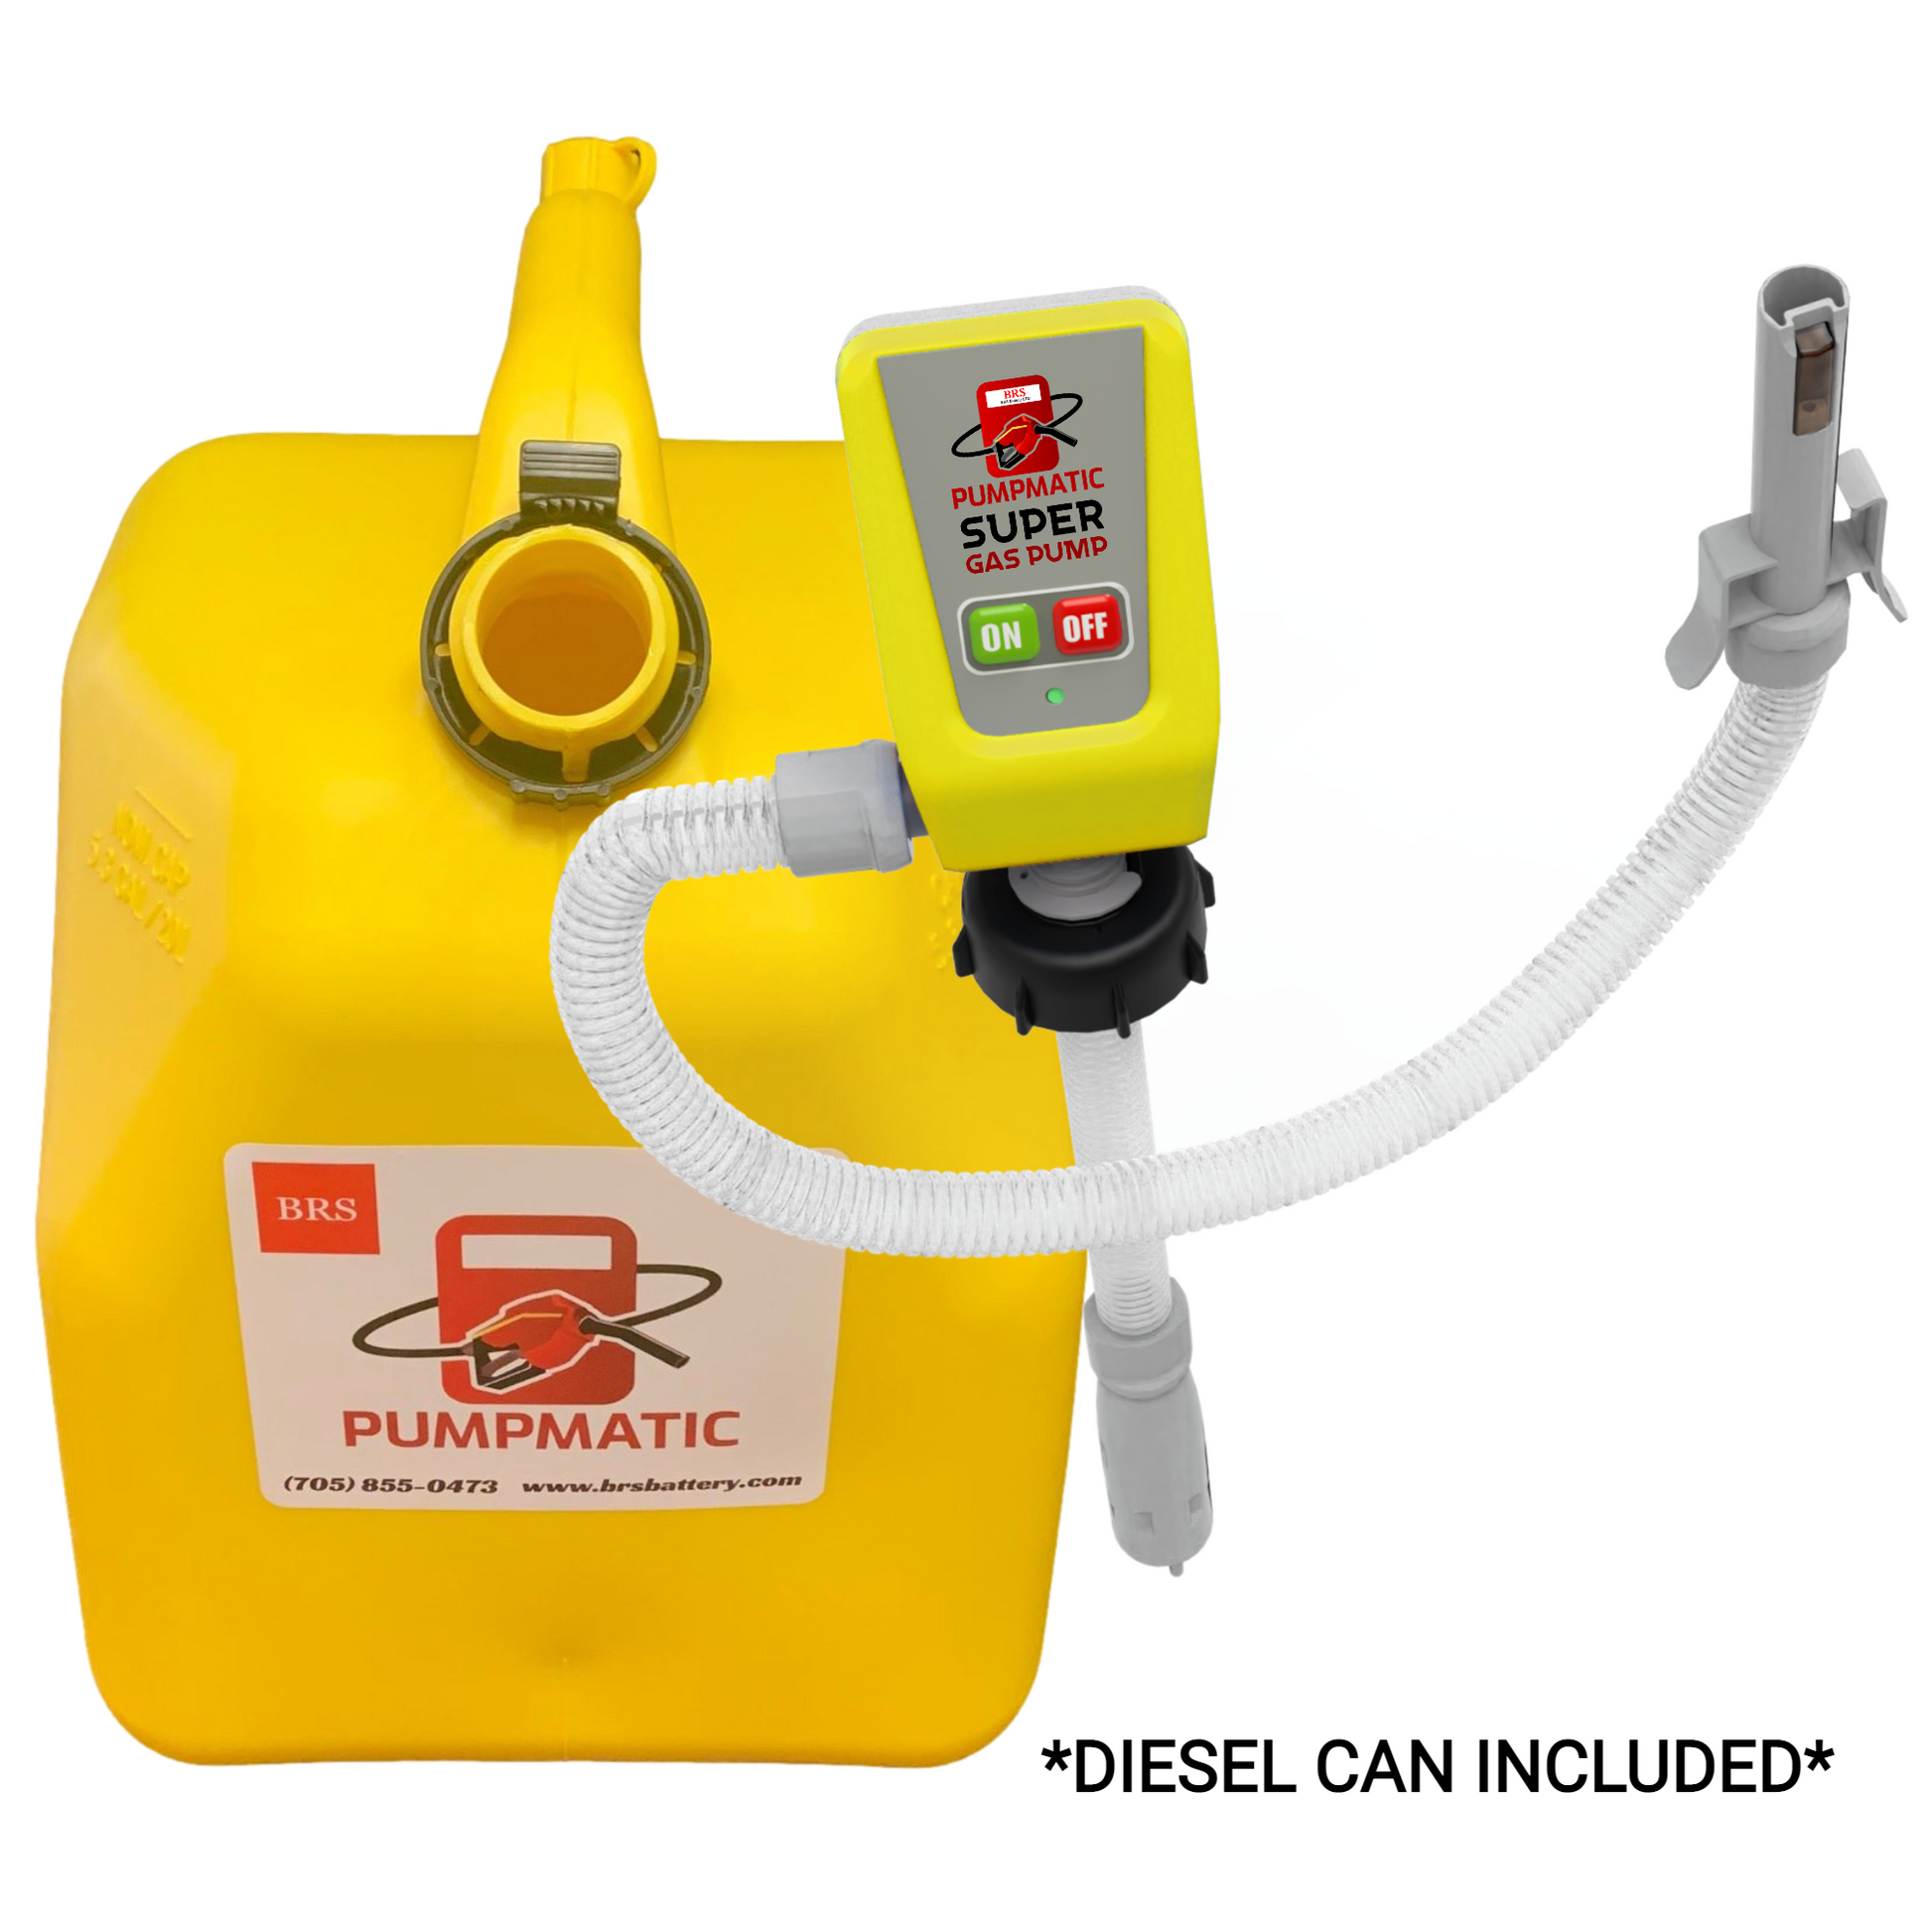 *NEW* BRS Diesel Pump - Yellow Diesel Pump + Diesel Fuel Can Combo Kit -Super Gas Pump for Gas, Diesel, Kerosene, etc.  3 Power Sources w/ Extra Long Hose - BRS Super Pumps